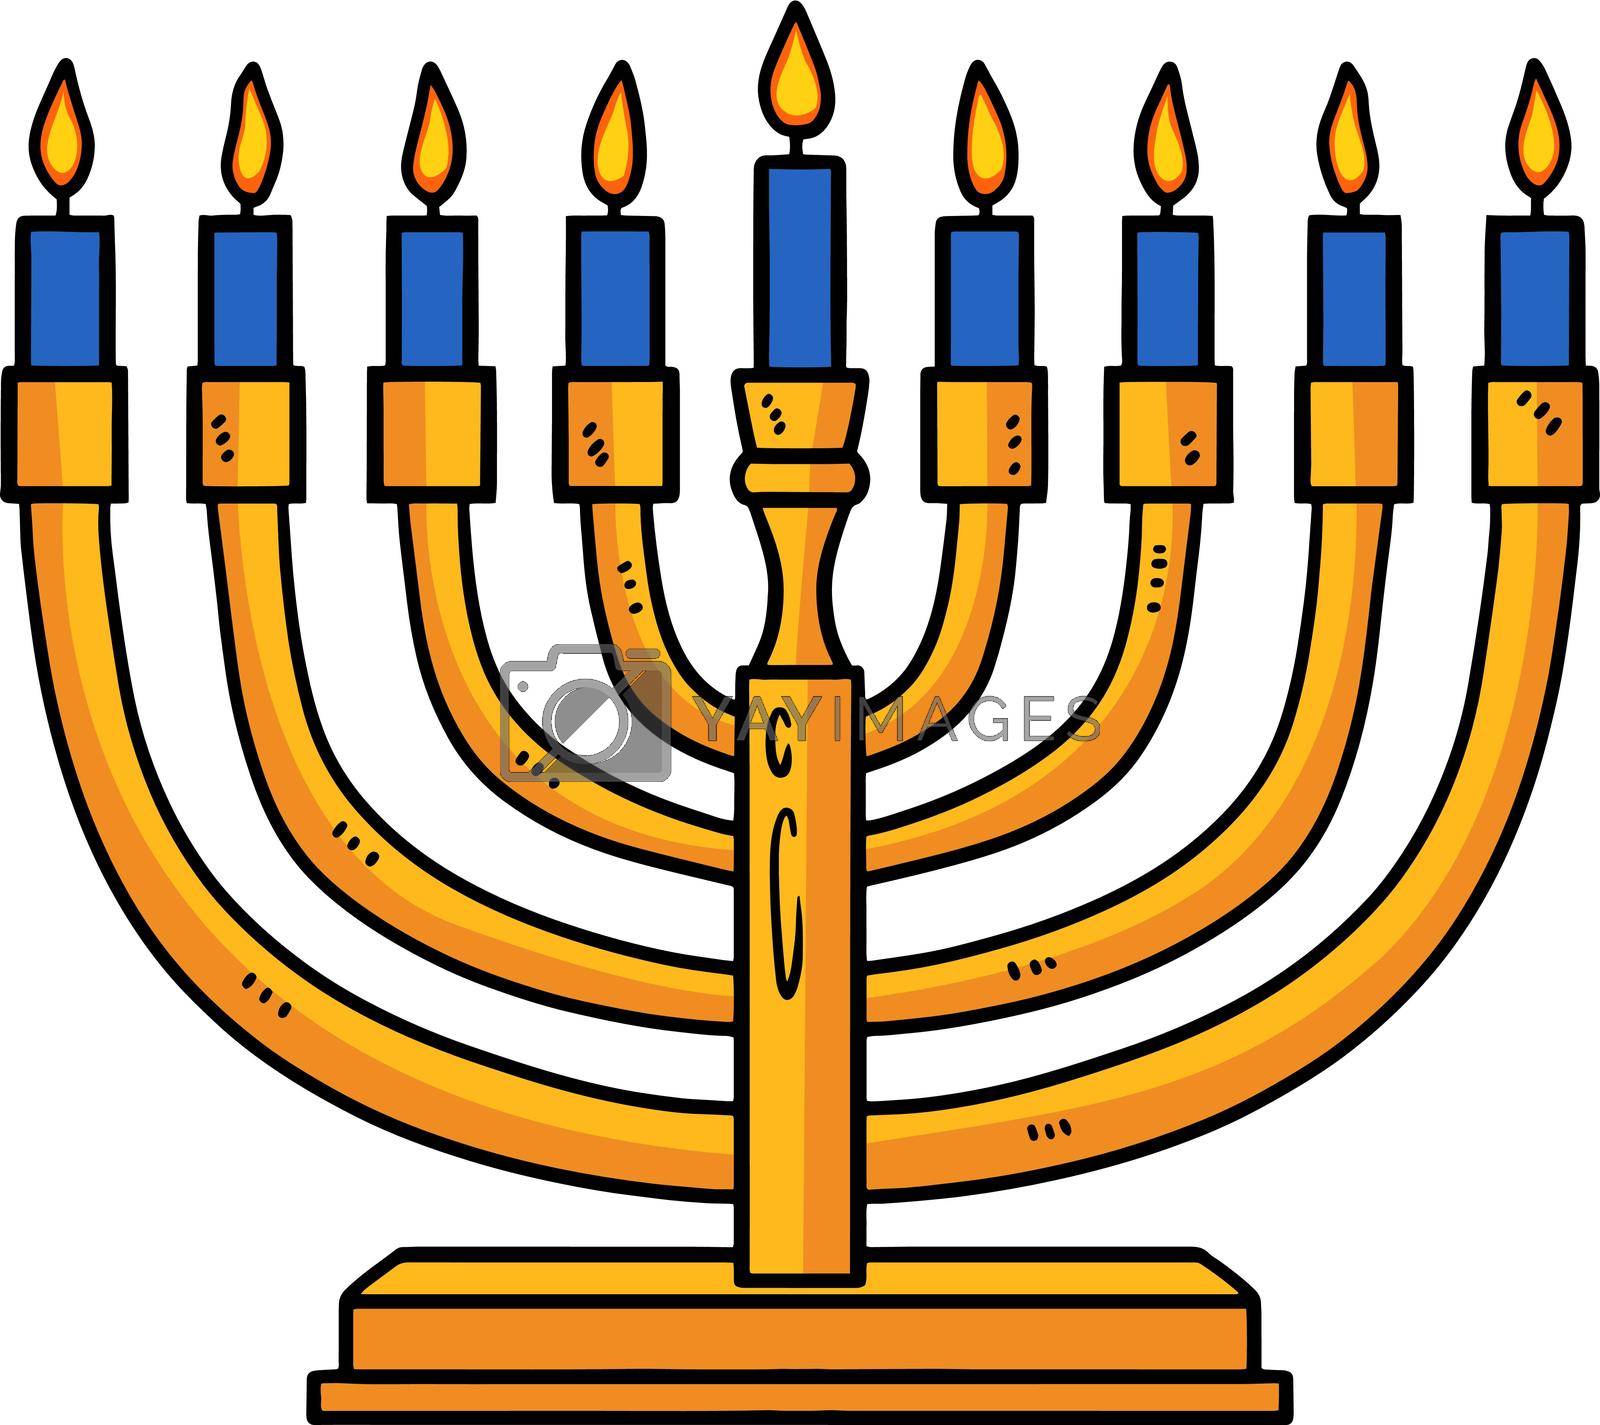 Royalty free image of Hanukkah Menorah Cartoon Colored Clipart by abbydesign